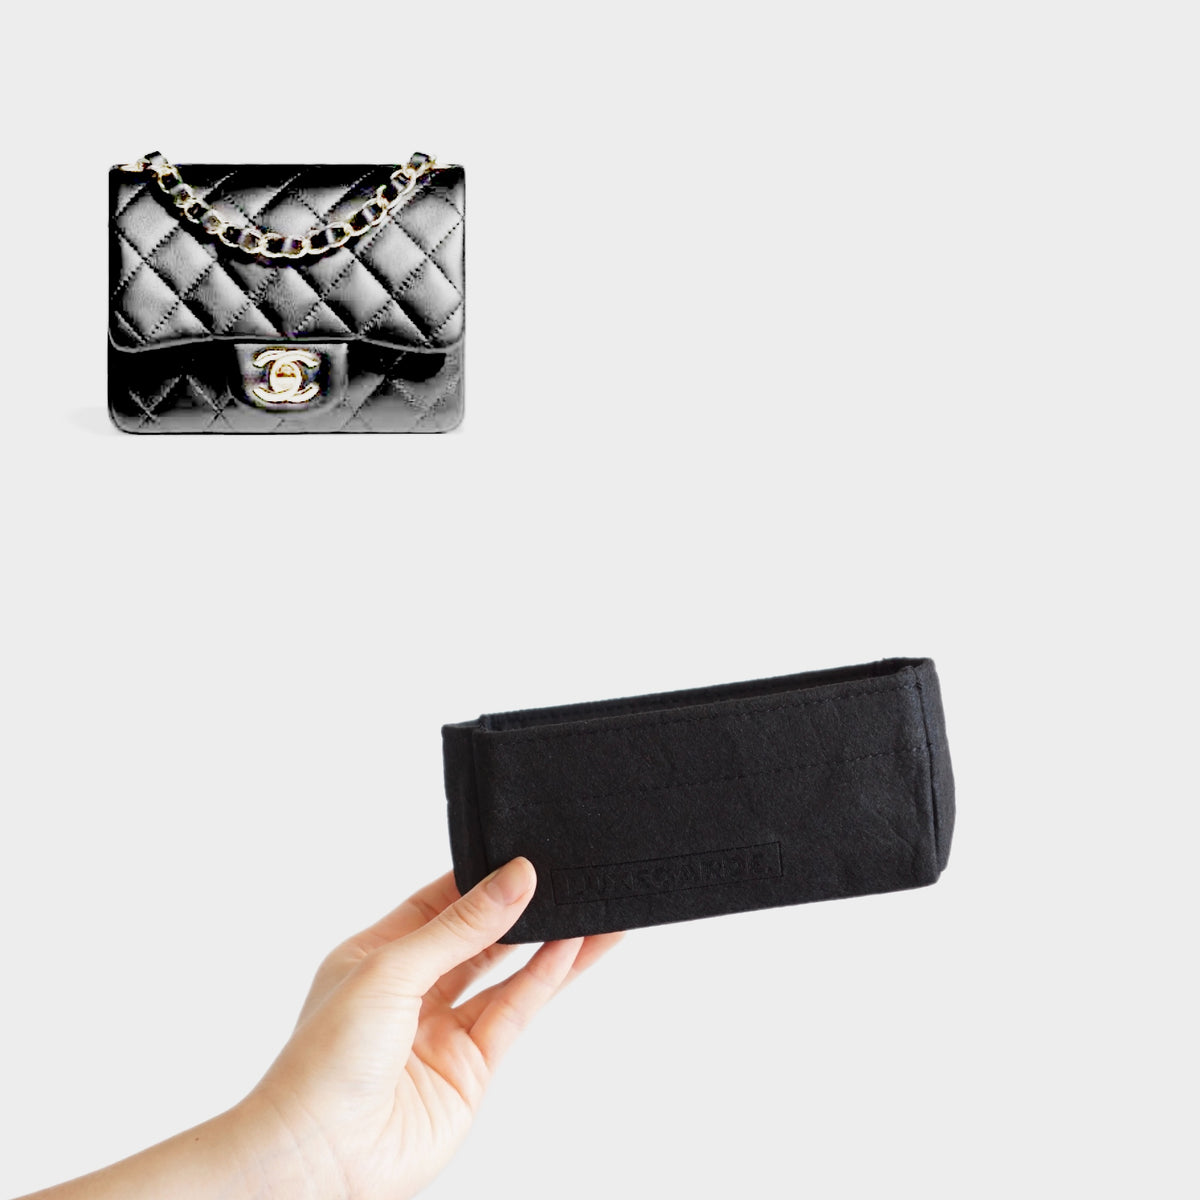  Lckaey Bag Organizer Insert for Chanel Classic Flap Medium bag  Shaper Purse Insert - Premium Handbag Felt Organizer 2009brown-M :  Clothing, Shoes & Jewelry